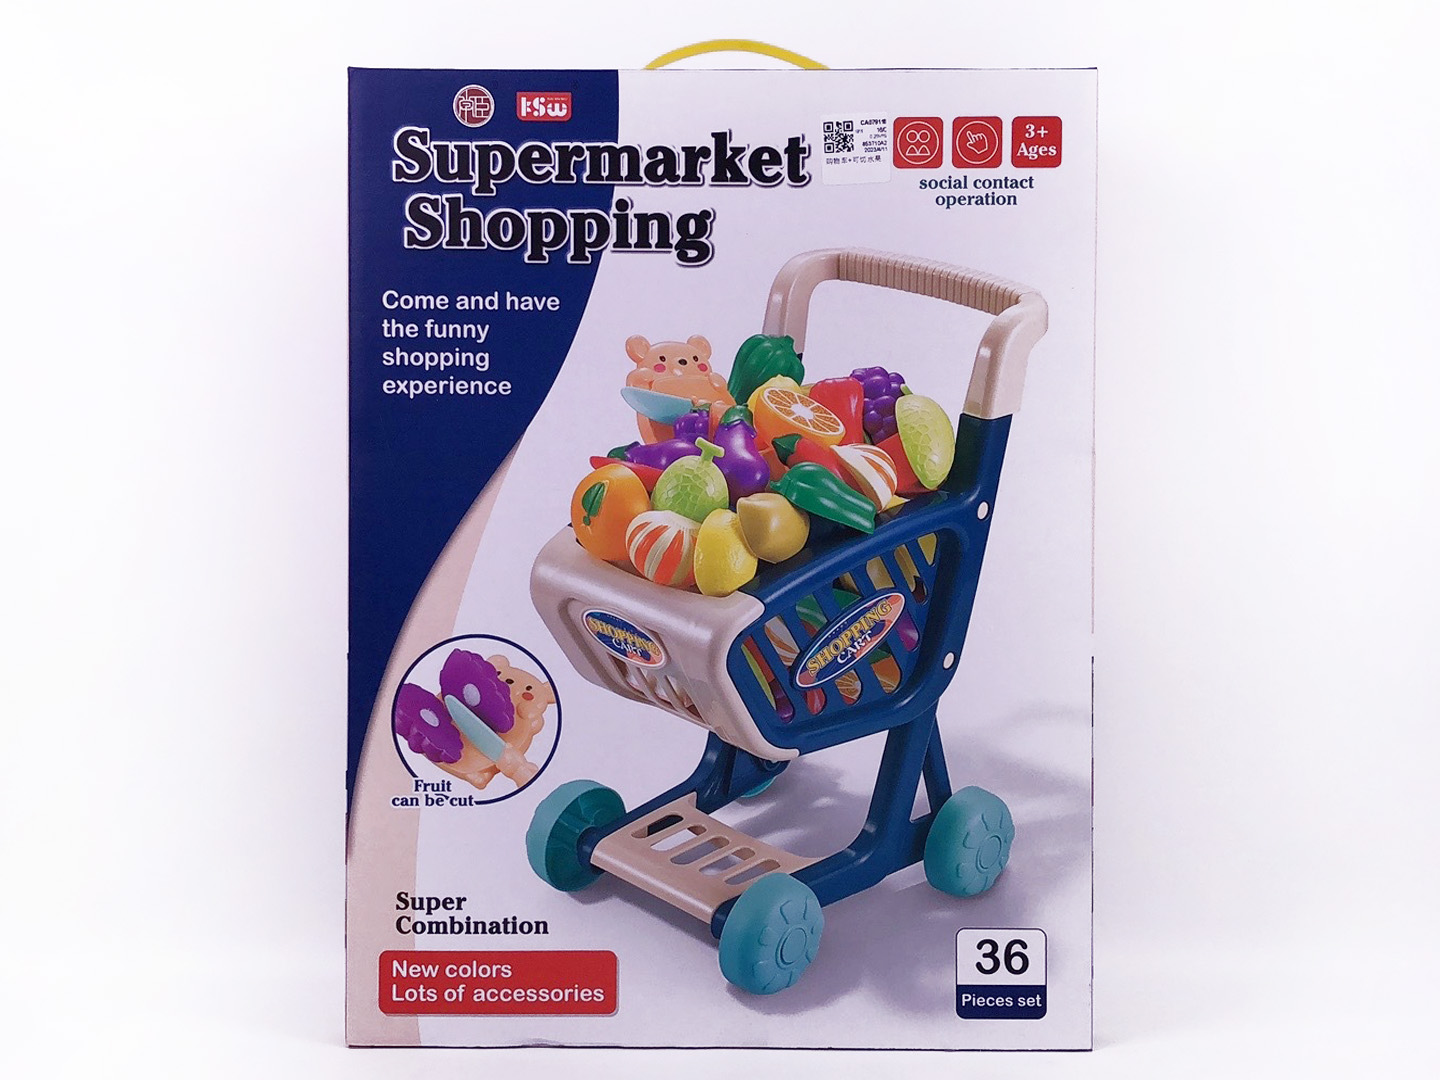 Shopping Cart & Cut Fruit toys